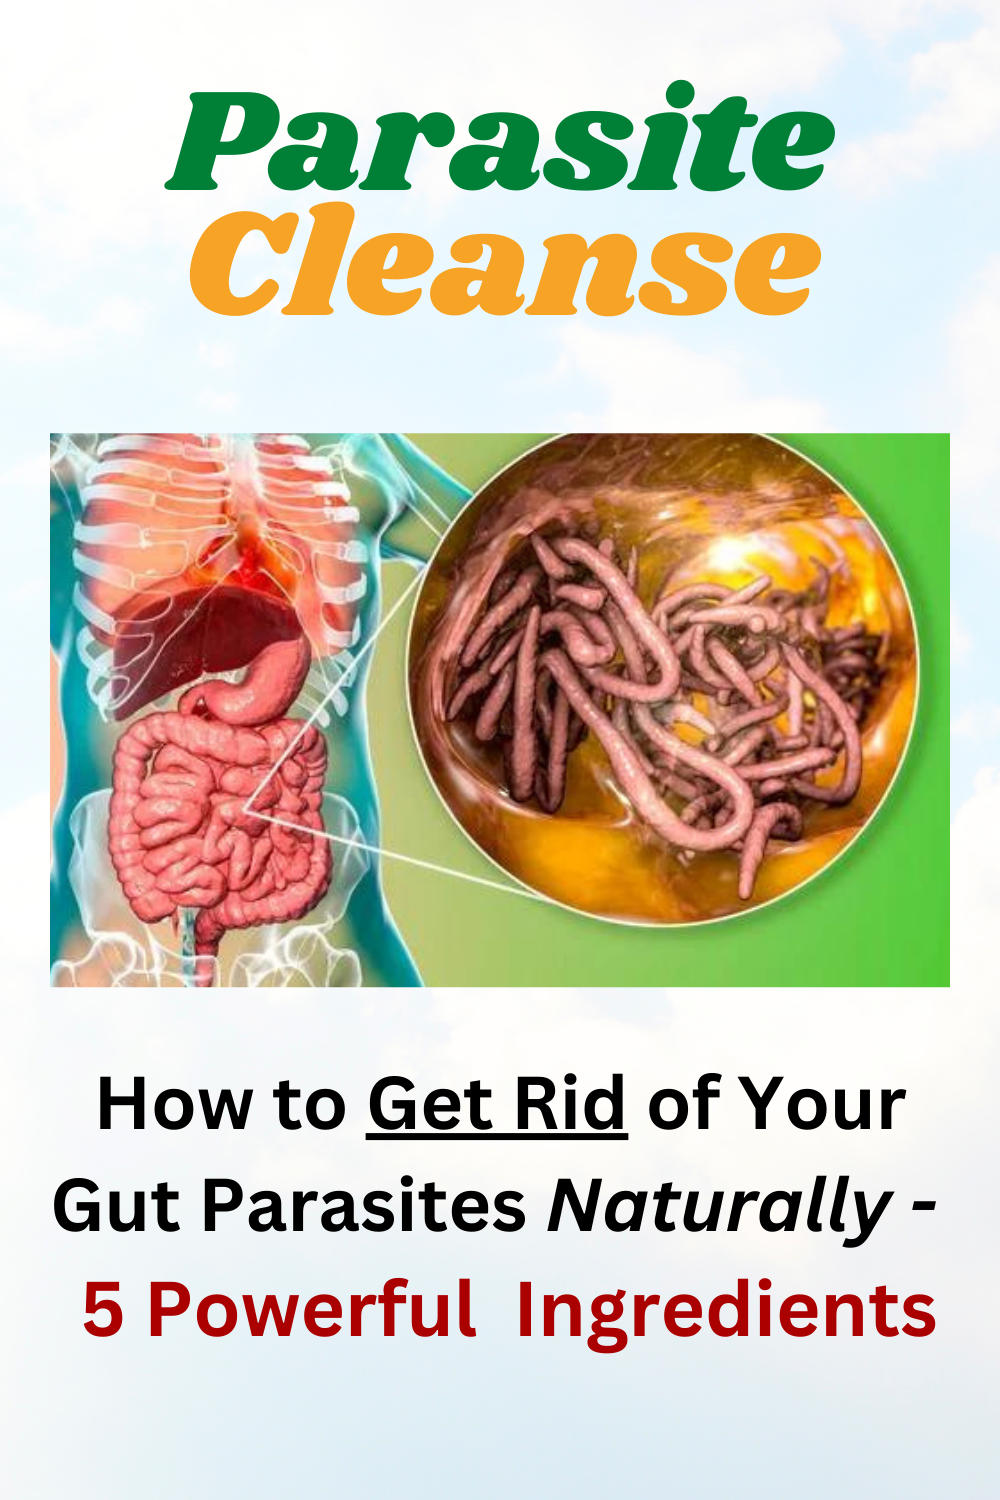 Parasite cleanse.